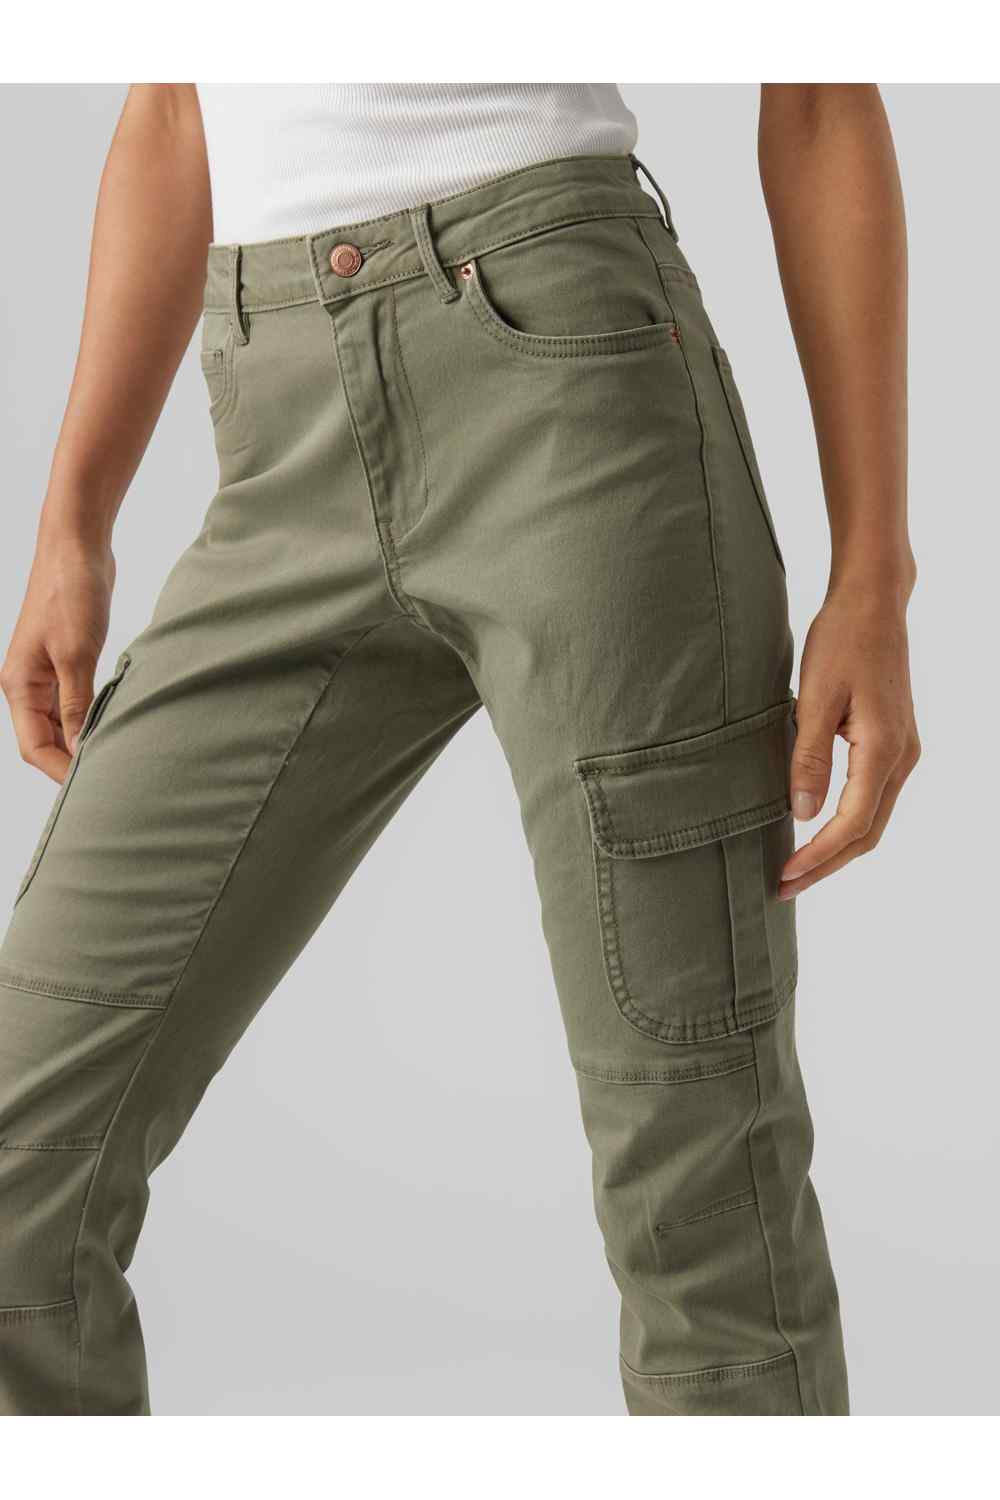 Vero Moda Ivy Cargo Pant - Green 2 Shaws Department Stores